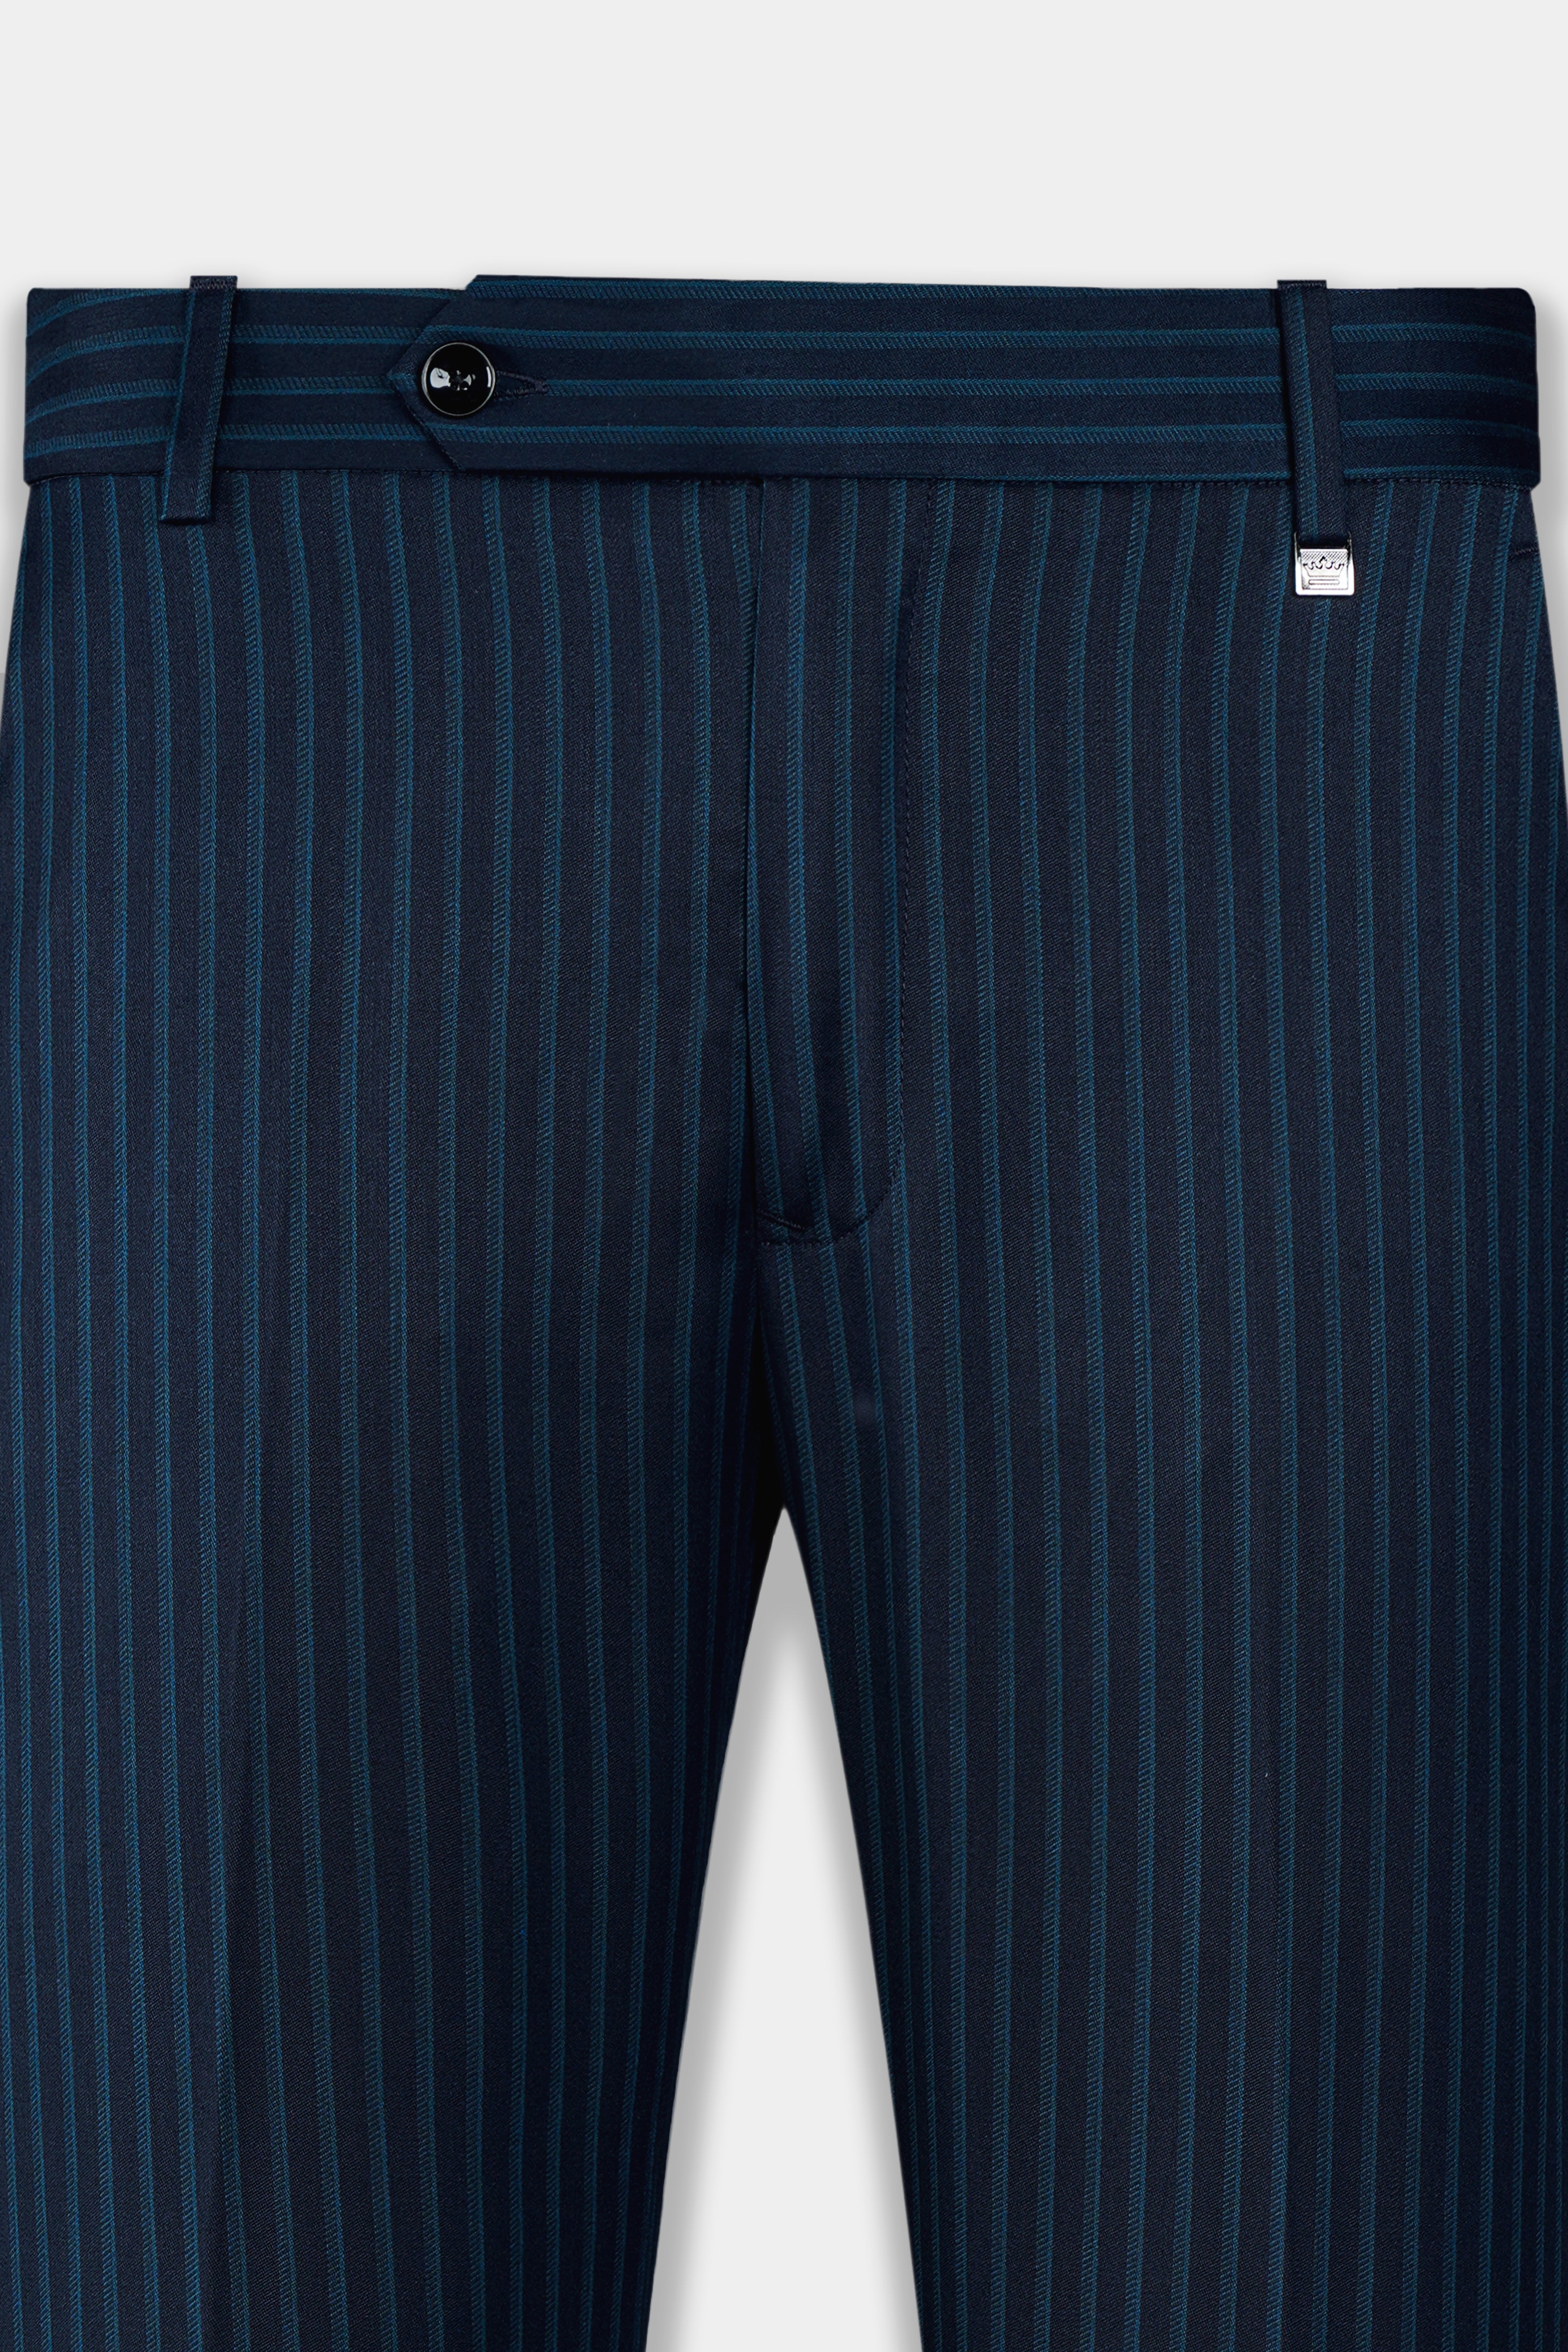 Ebony Blue and Marine Blue Pin Striped Wool Rich Stretchable Waistband Pant